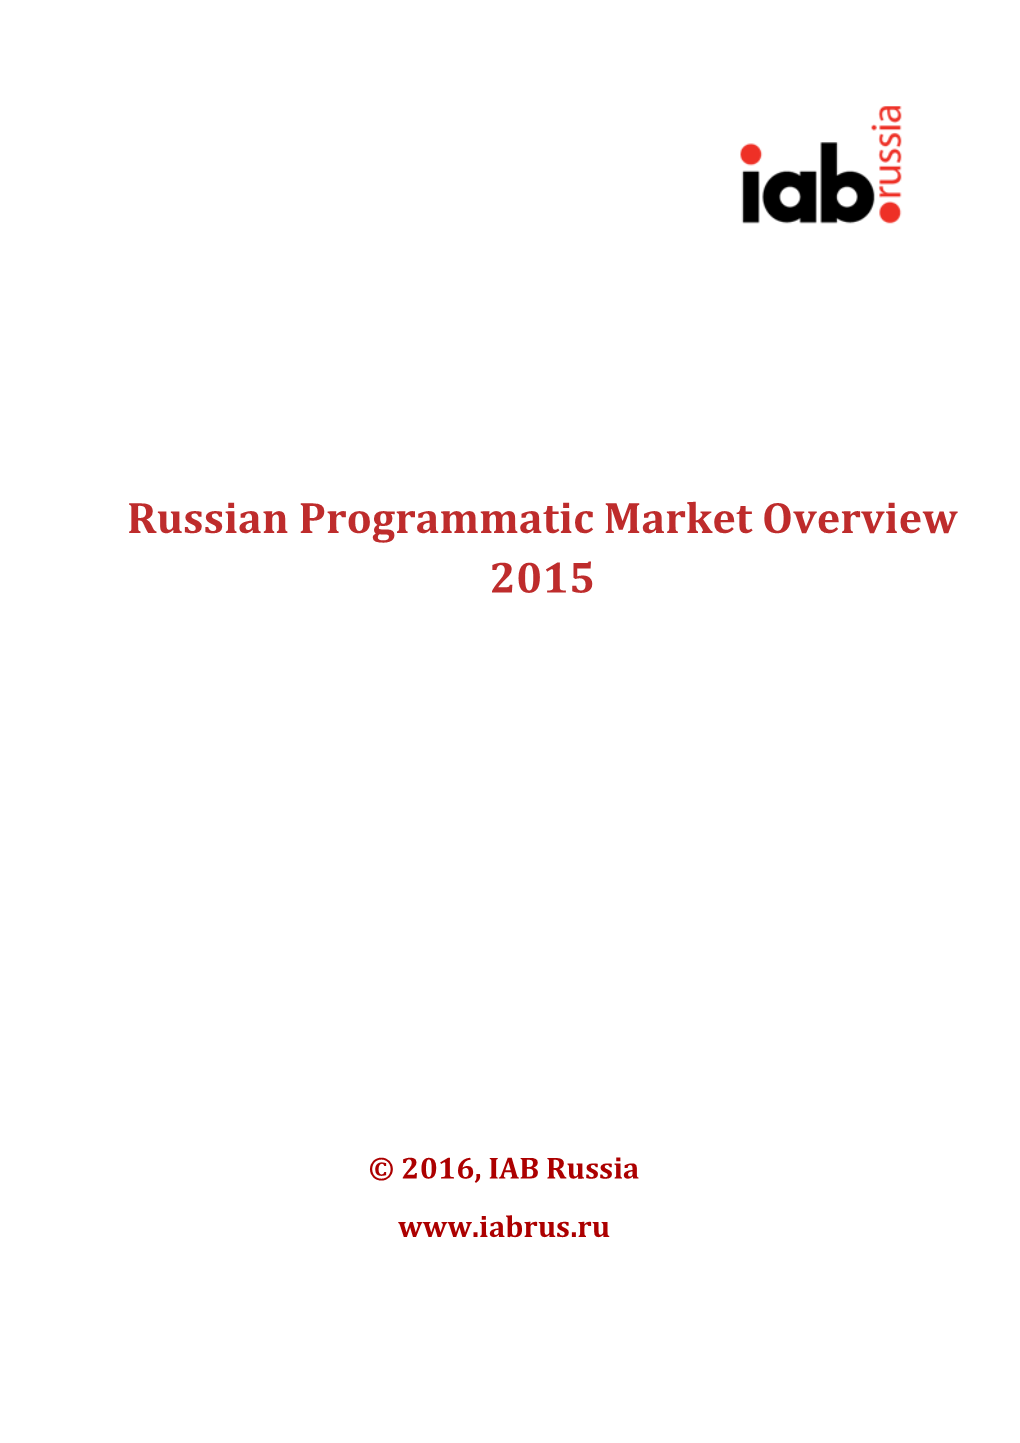 Russian Programmatic Market Overview 2015